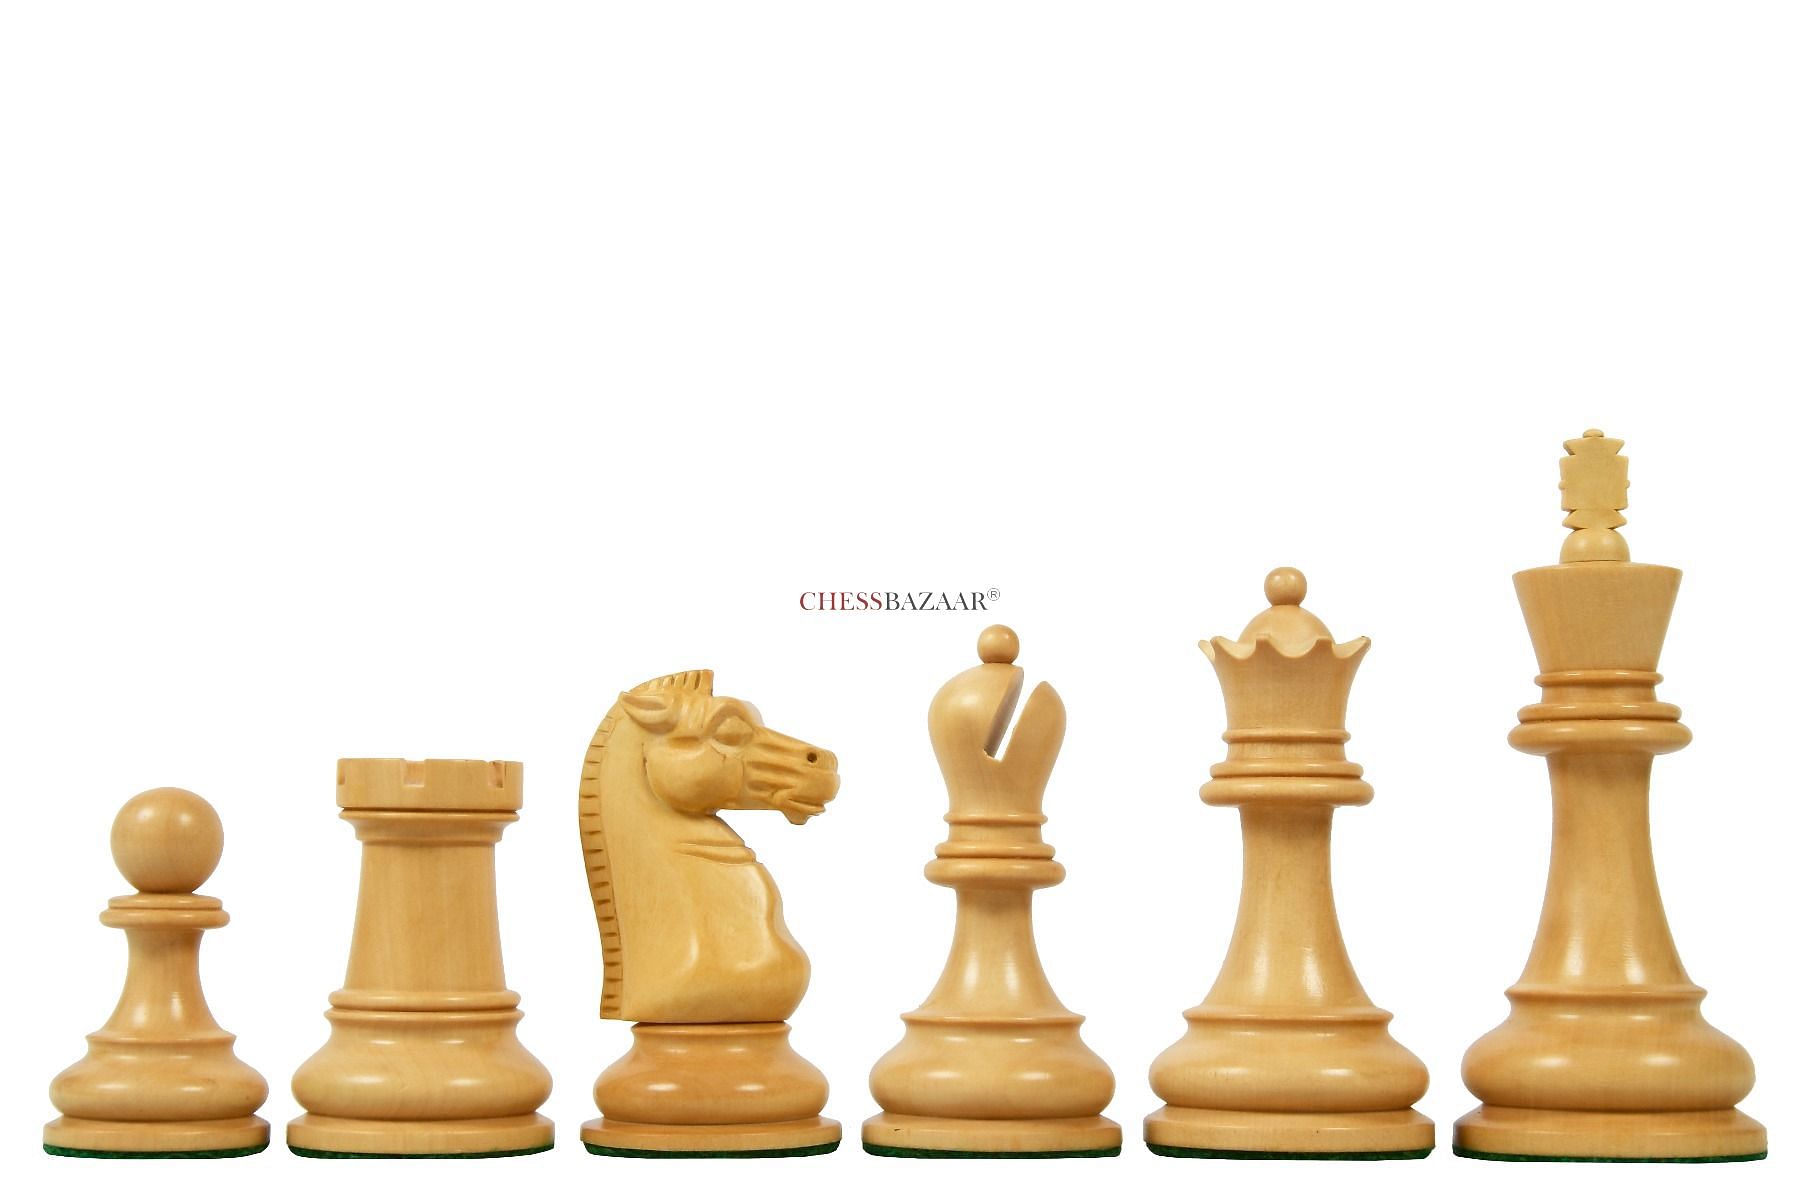 The British Chess Company Staunton Chess Pieces